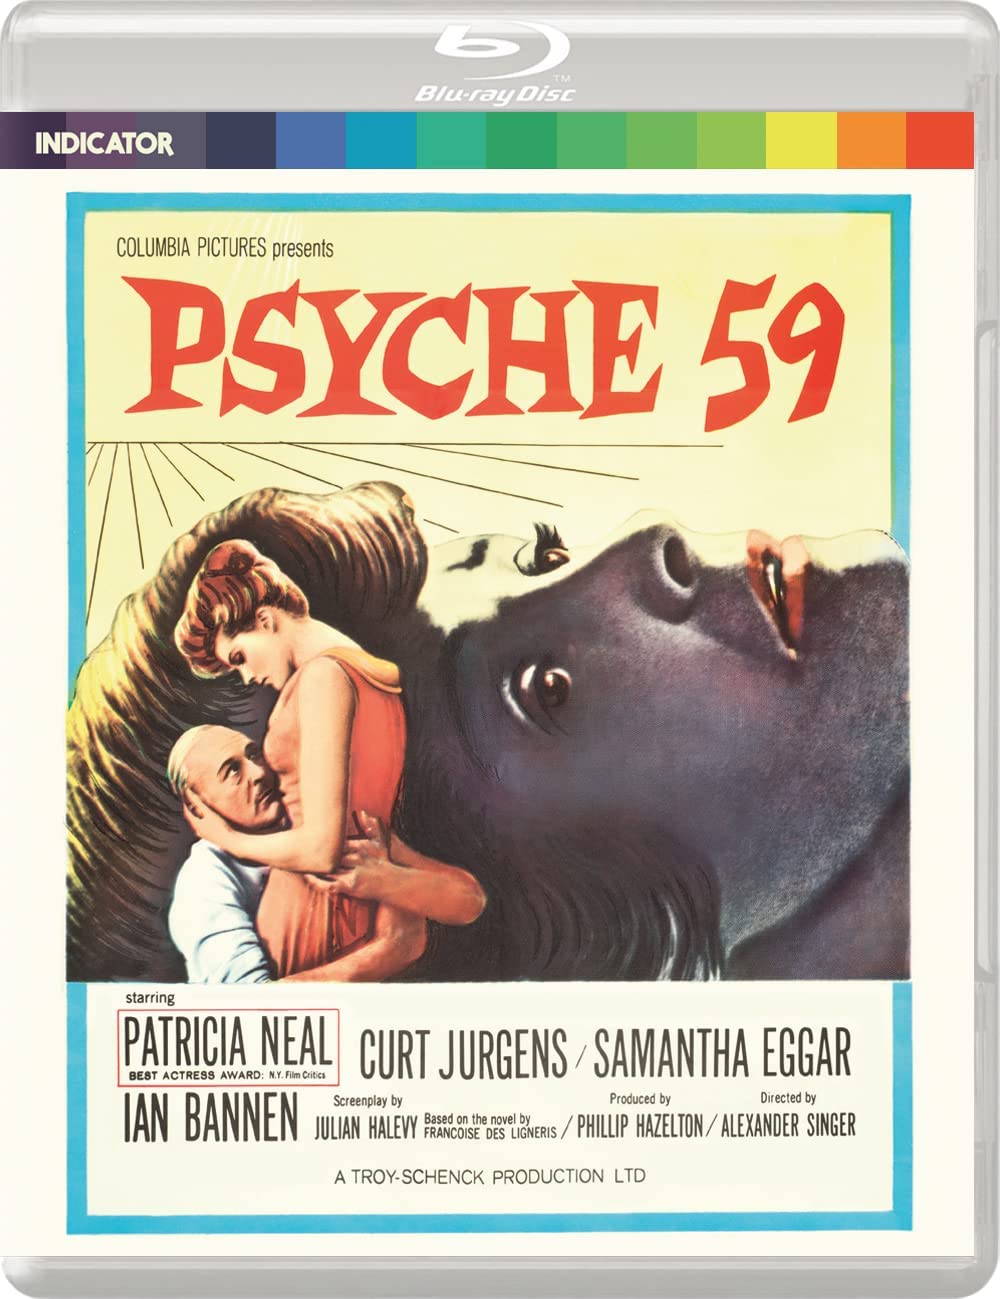 Psyche 59 (Standard Edition) [Region Free] [Blu-ray]